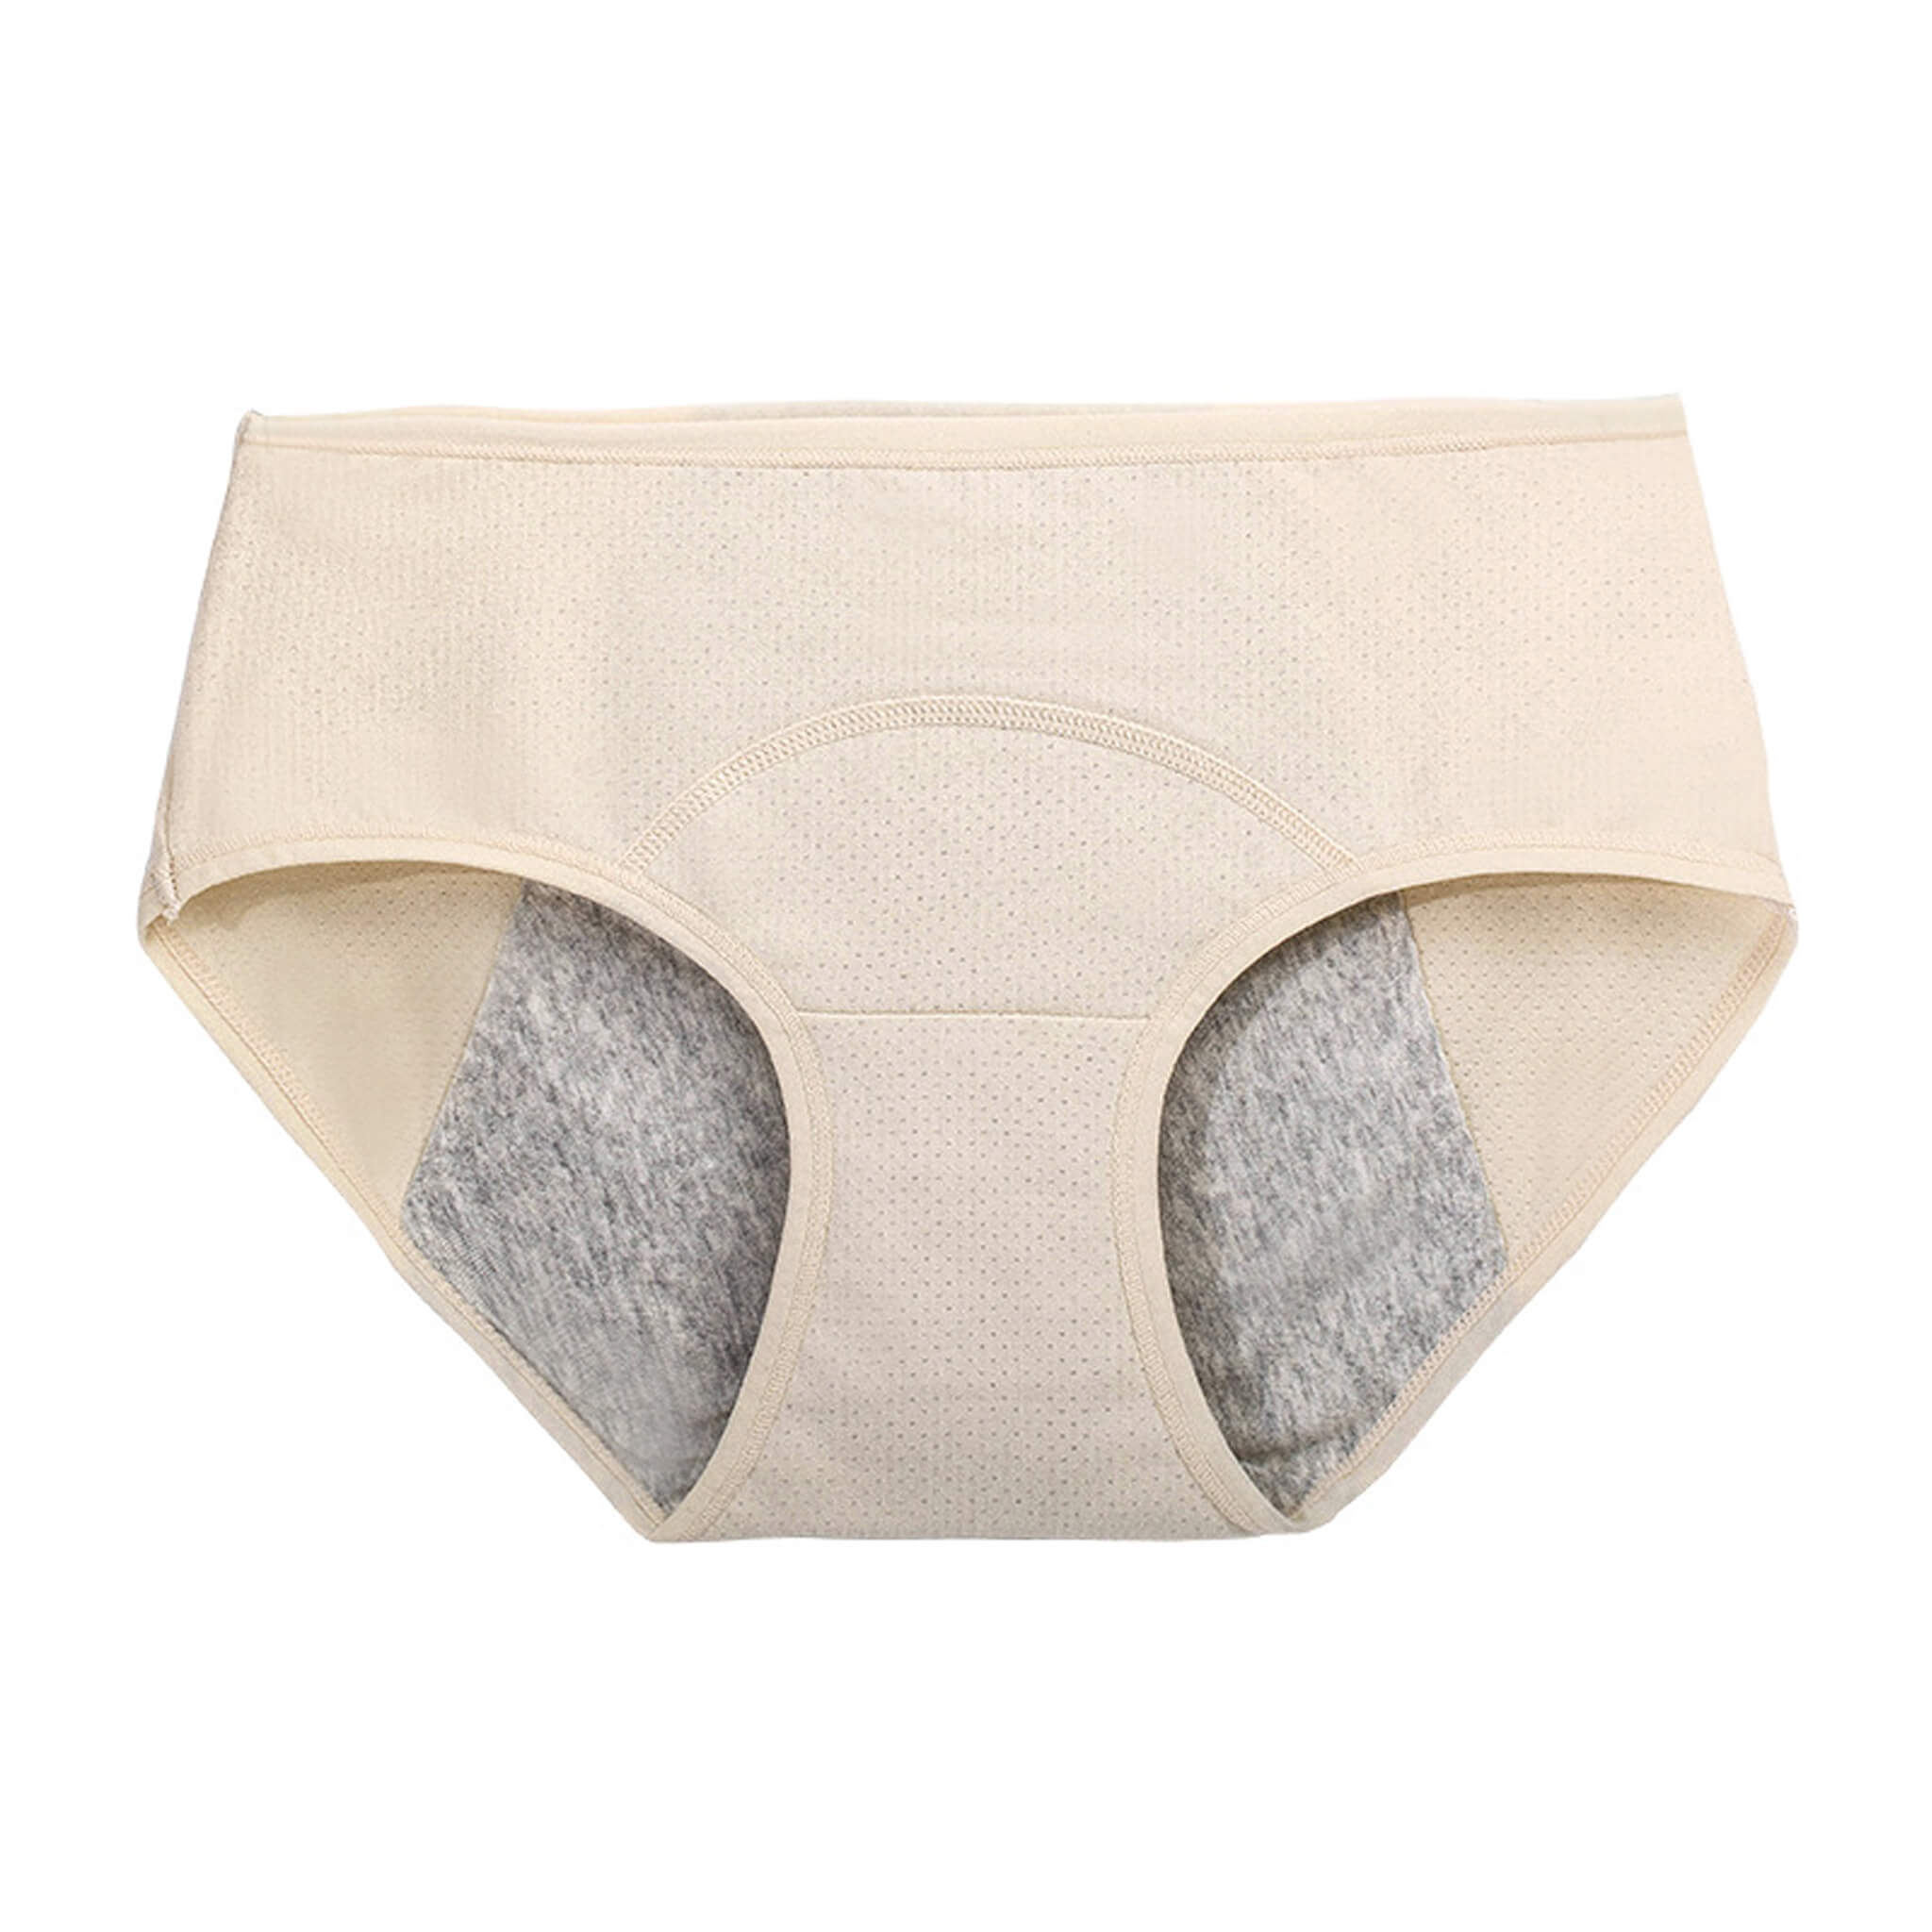 Leakproof period underwear — buy completely safe period panties, by  Kirijourney